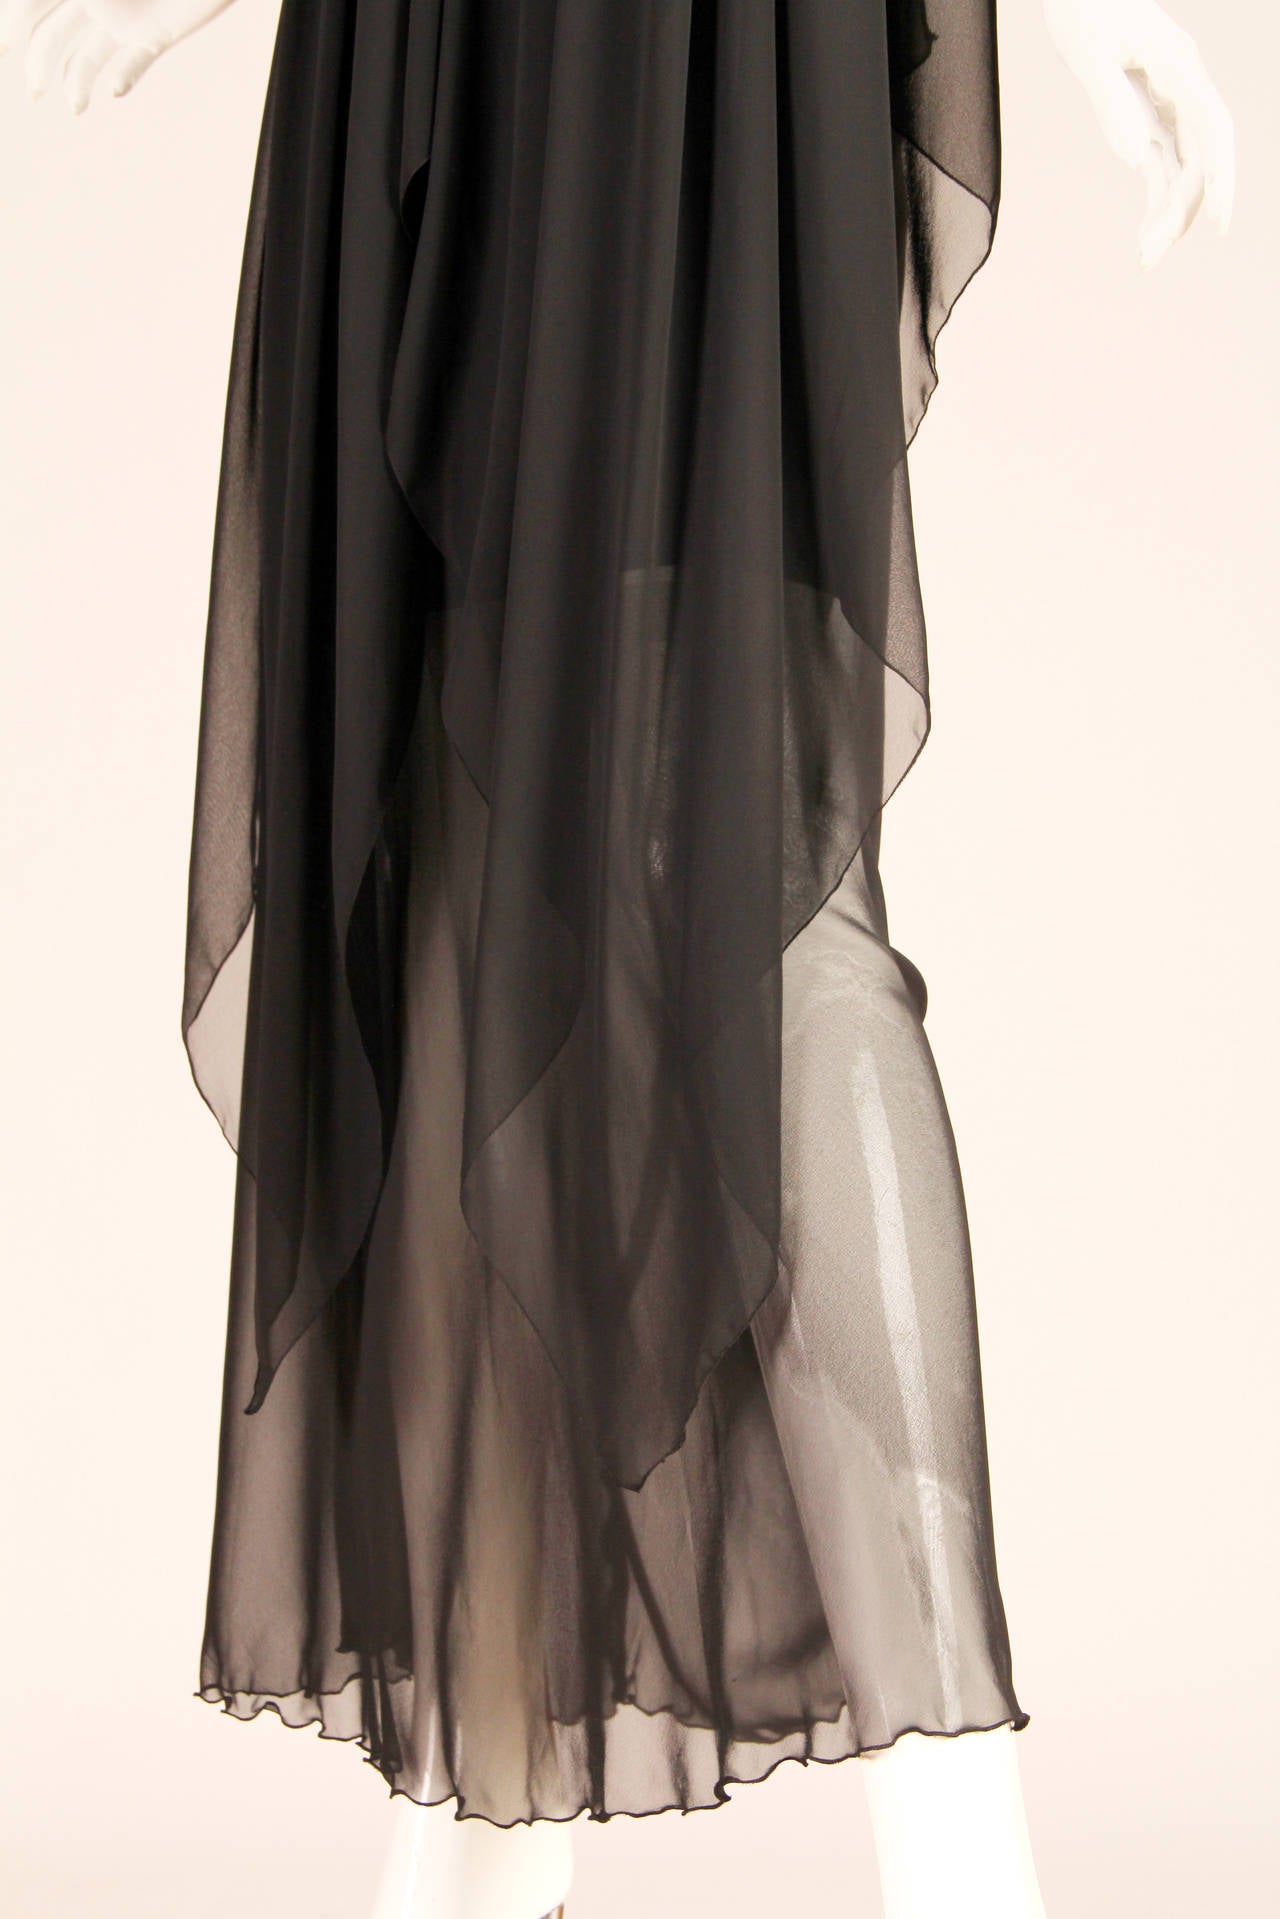 Pierre Cardin Haute Couture Chiffon Evening Dress 1